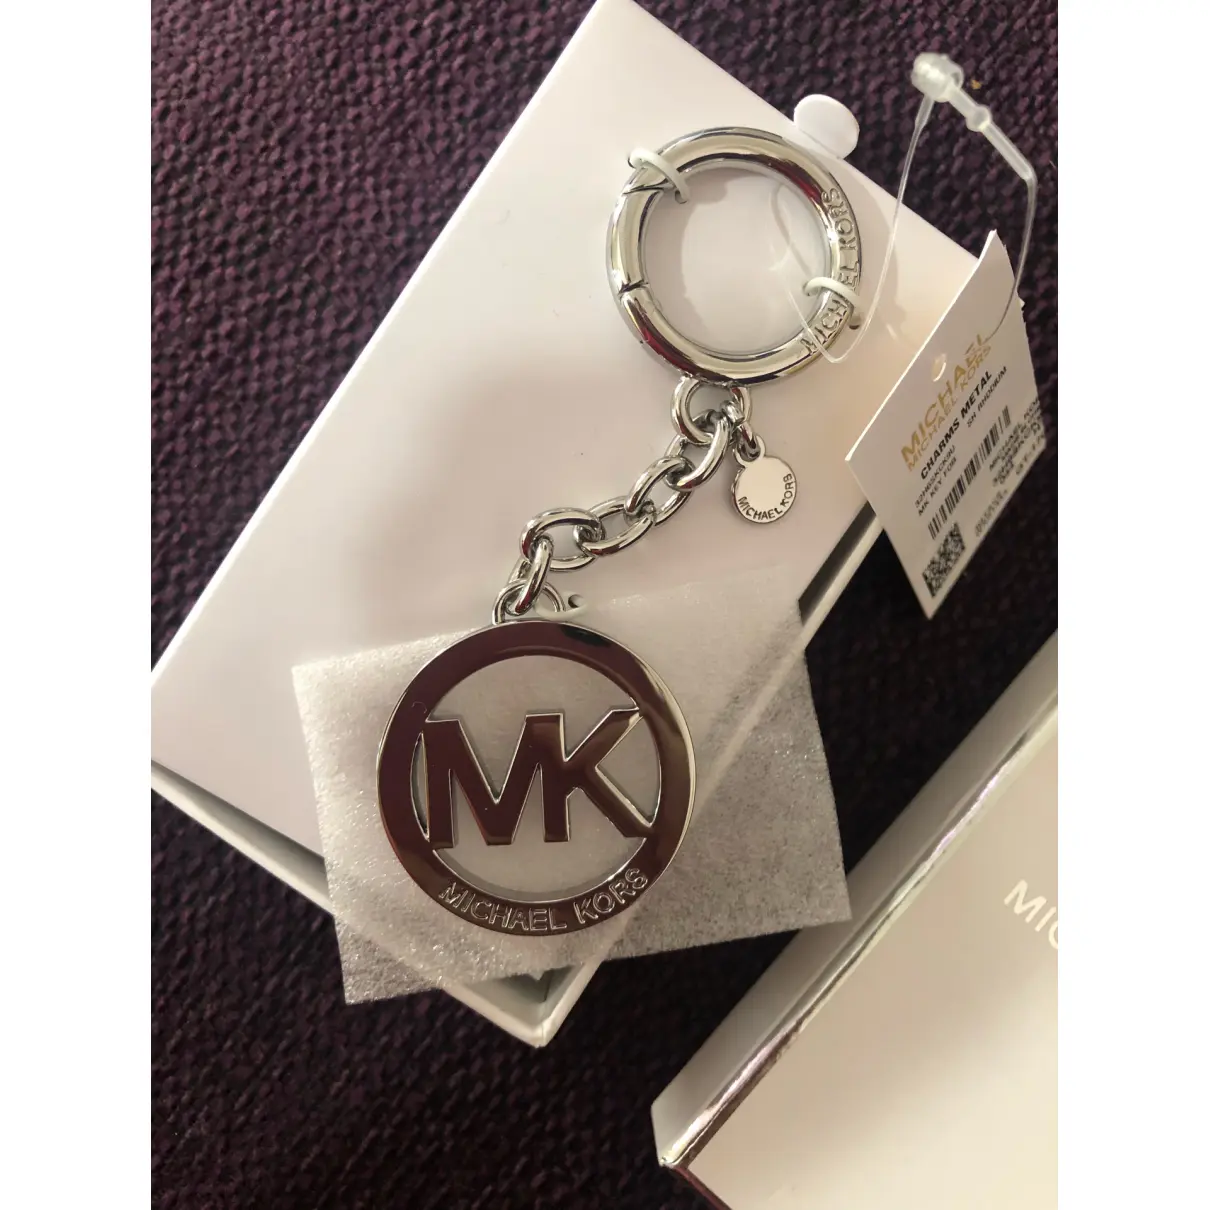 Buy Michael Kors Bag charm online